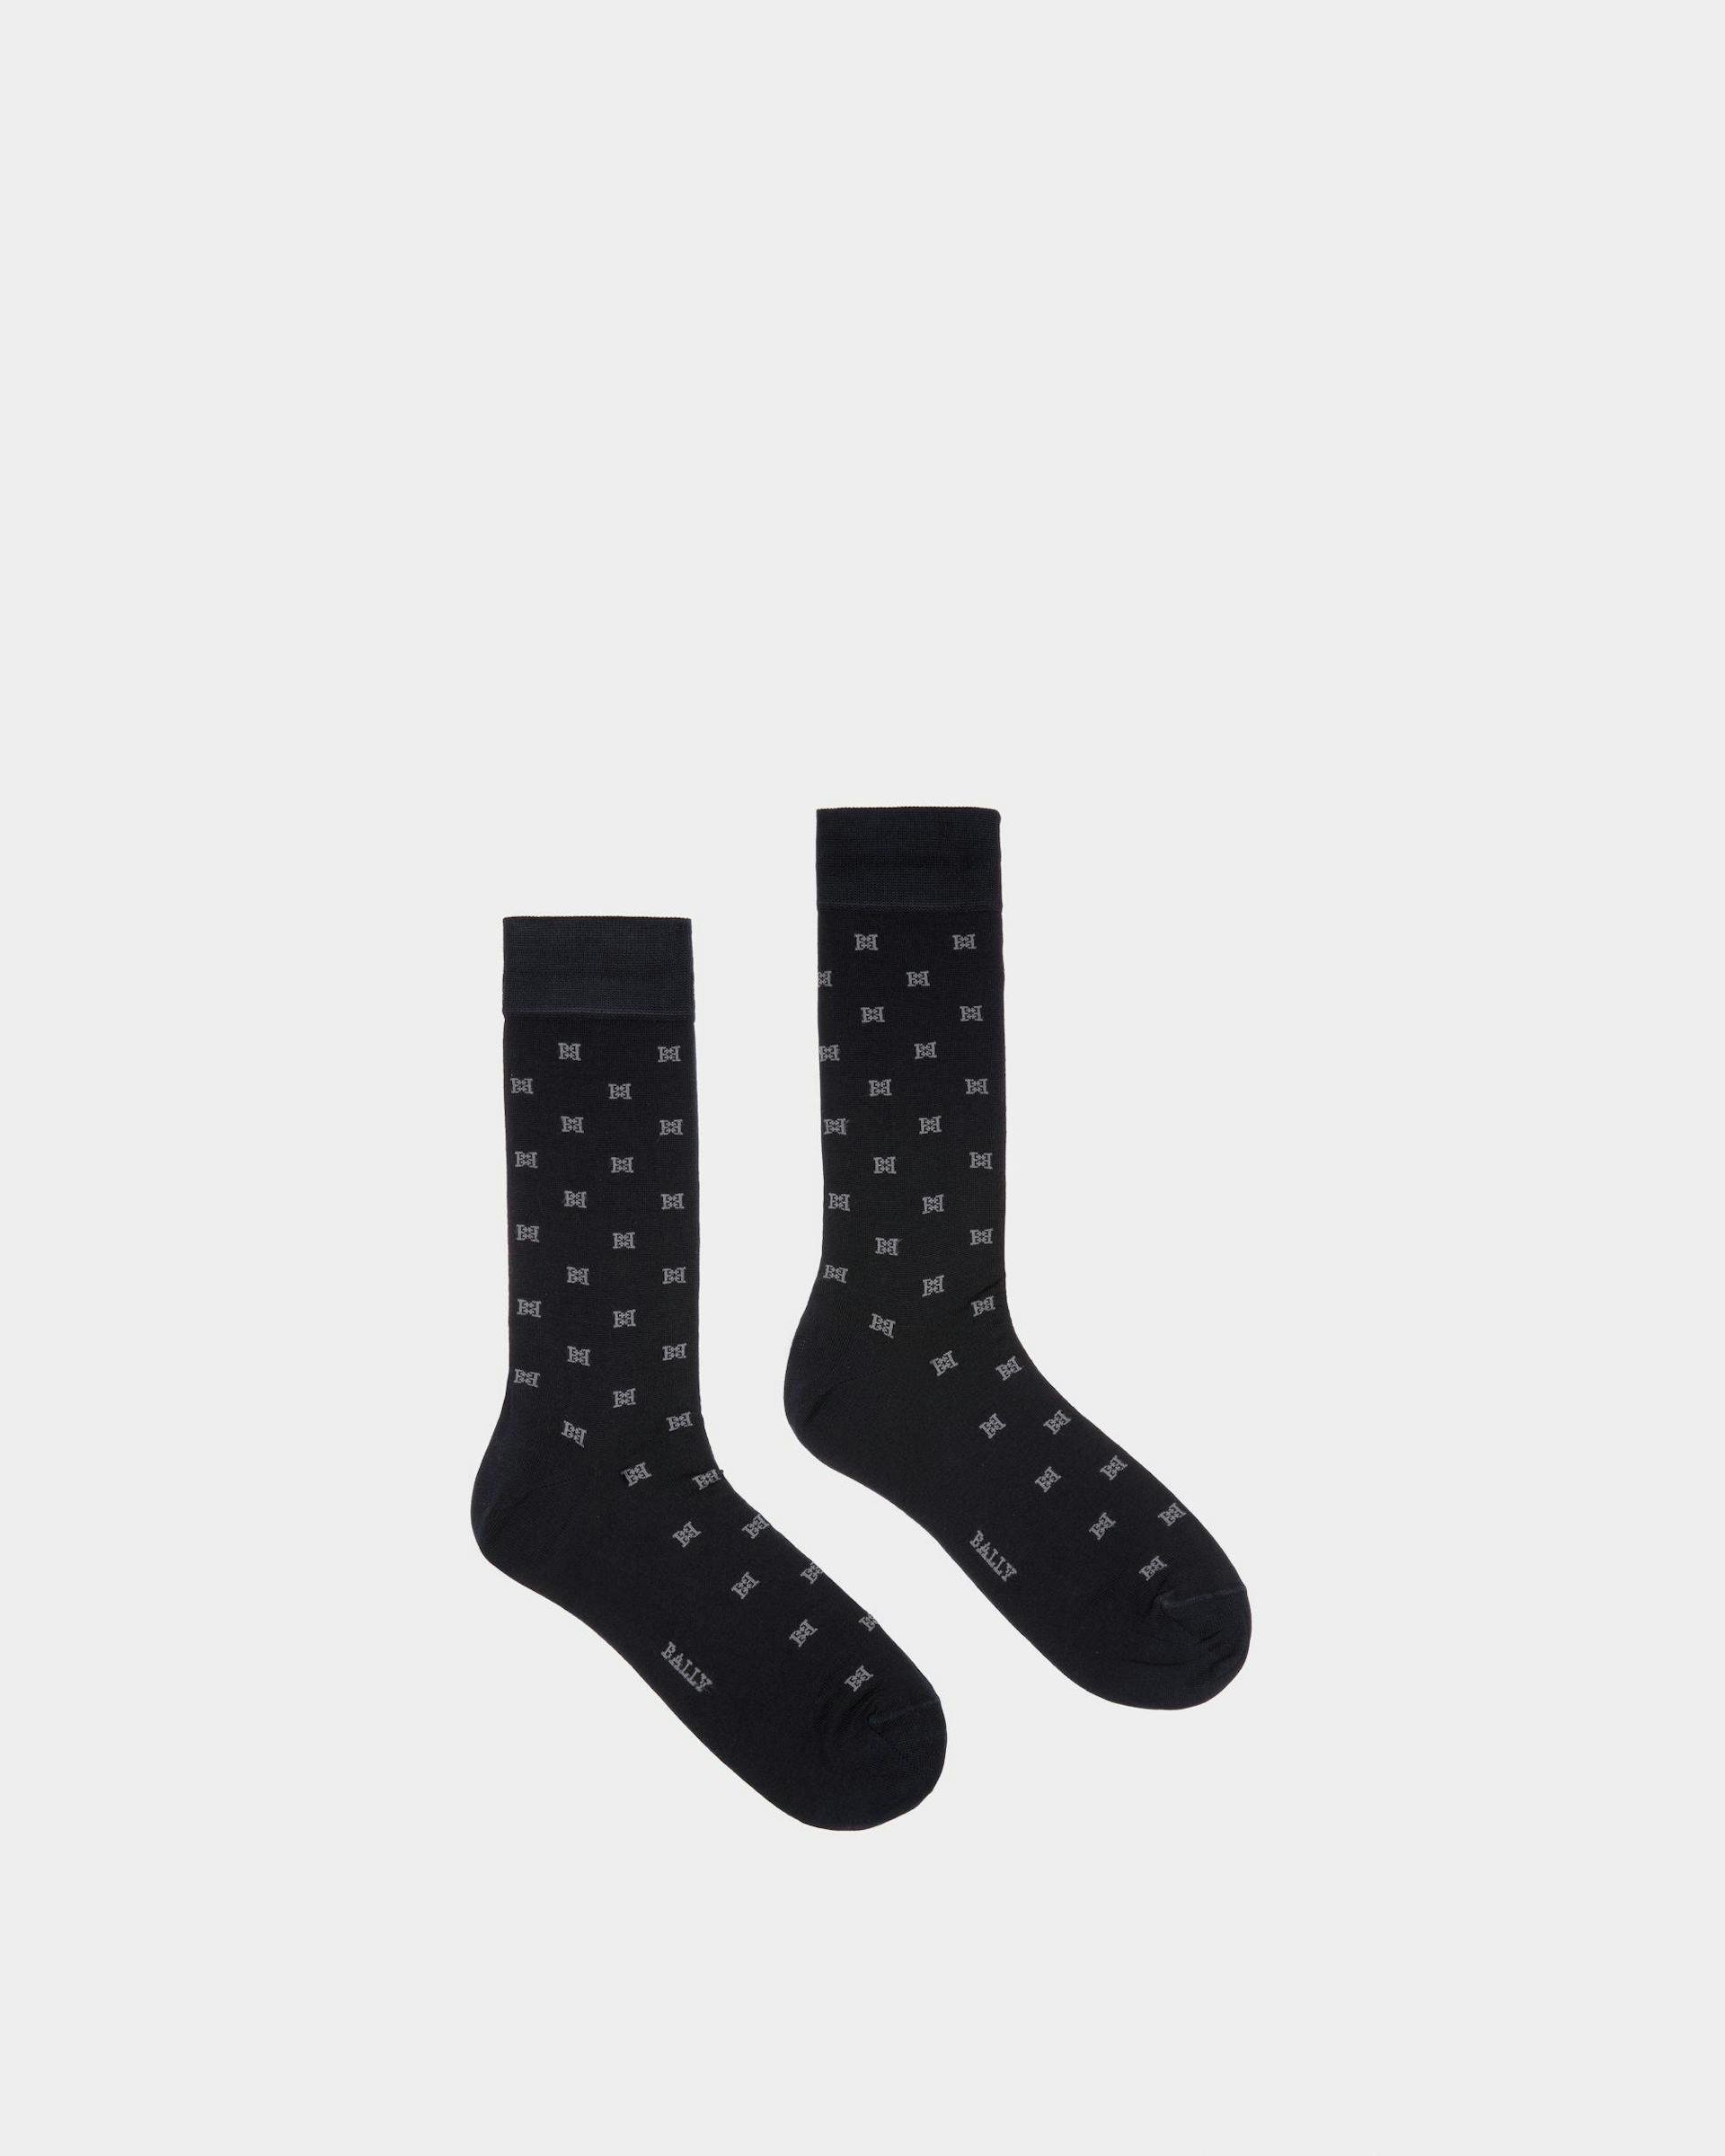 Cotton Jacquard Socks In Navy And Gray - Men's - Bally - 01